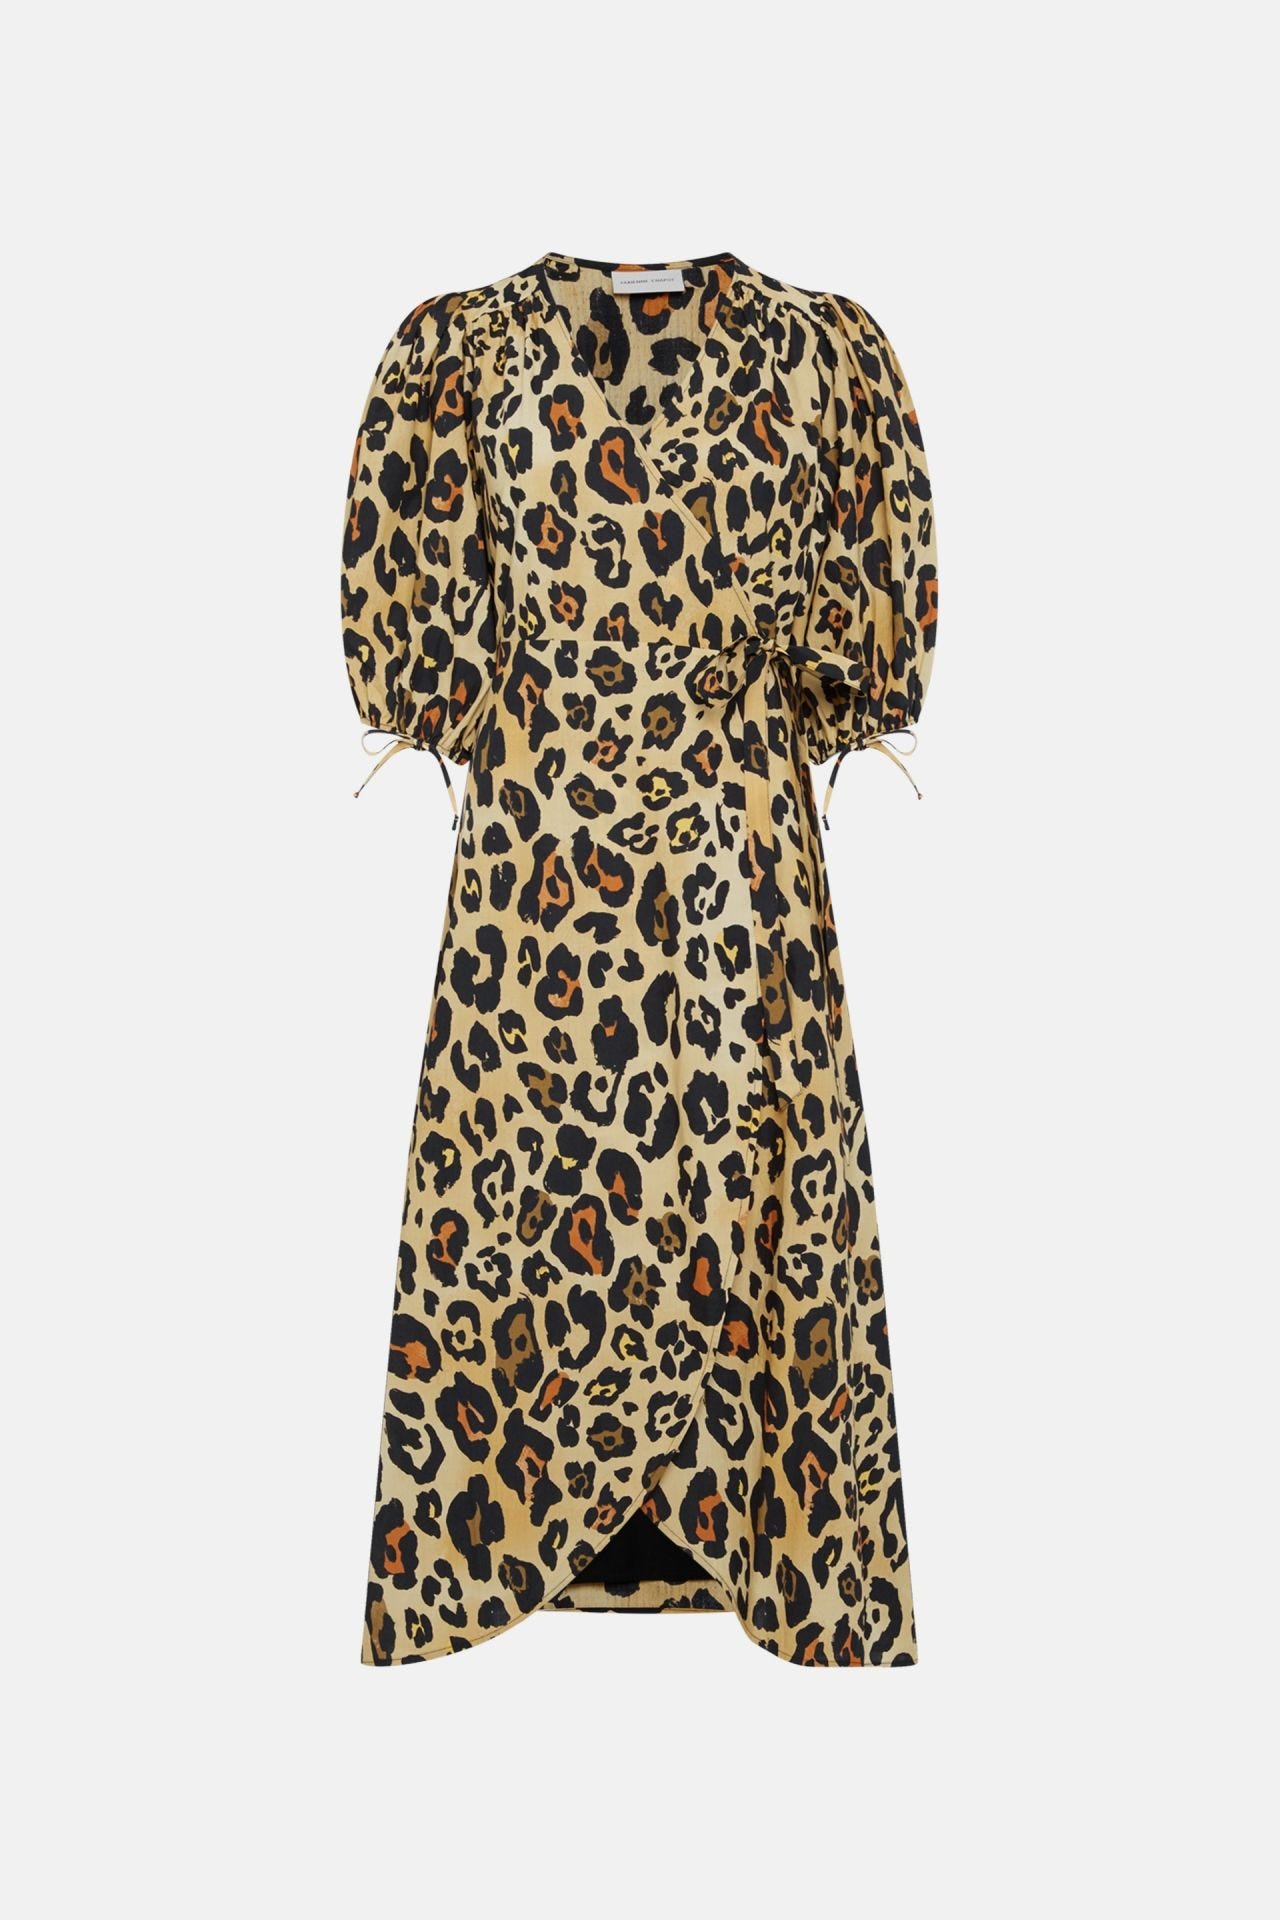 Fabienne Chapot Leopardo Charlie Dress